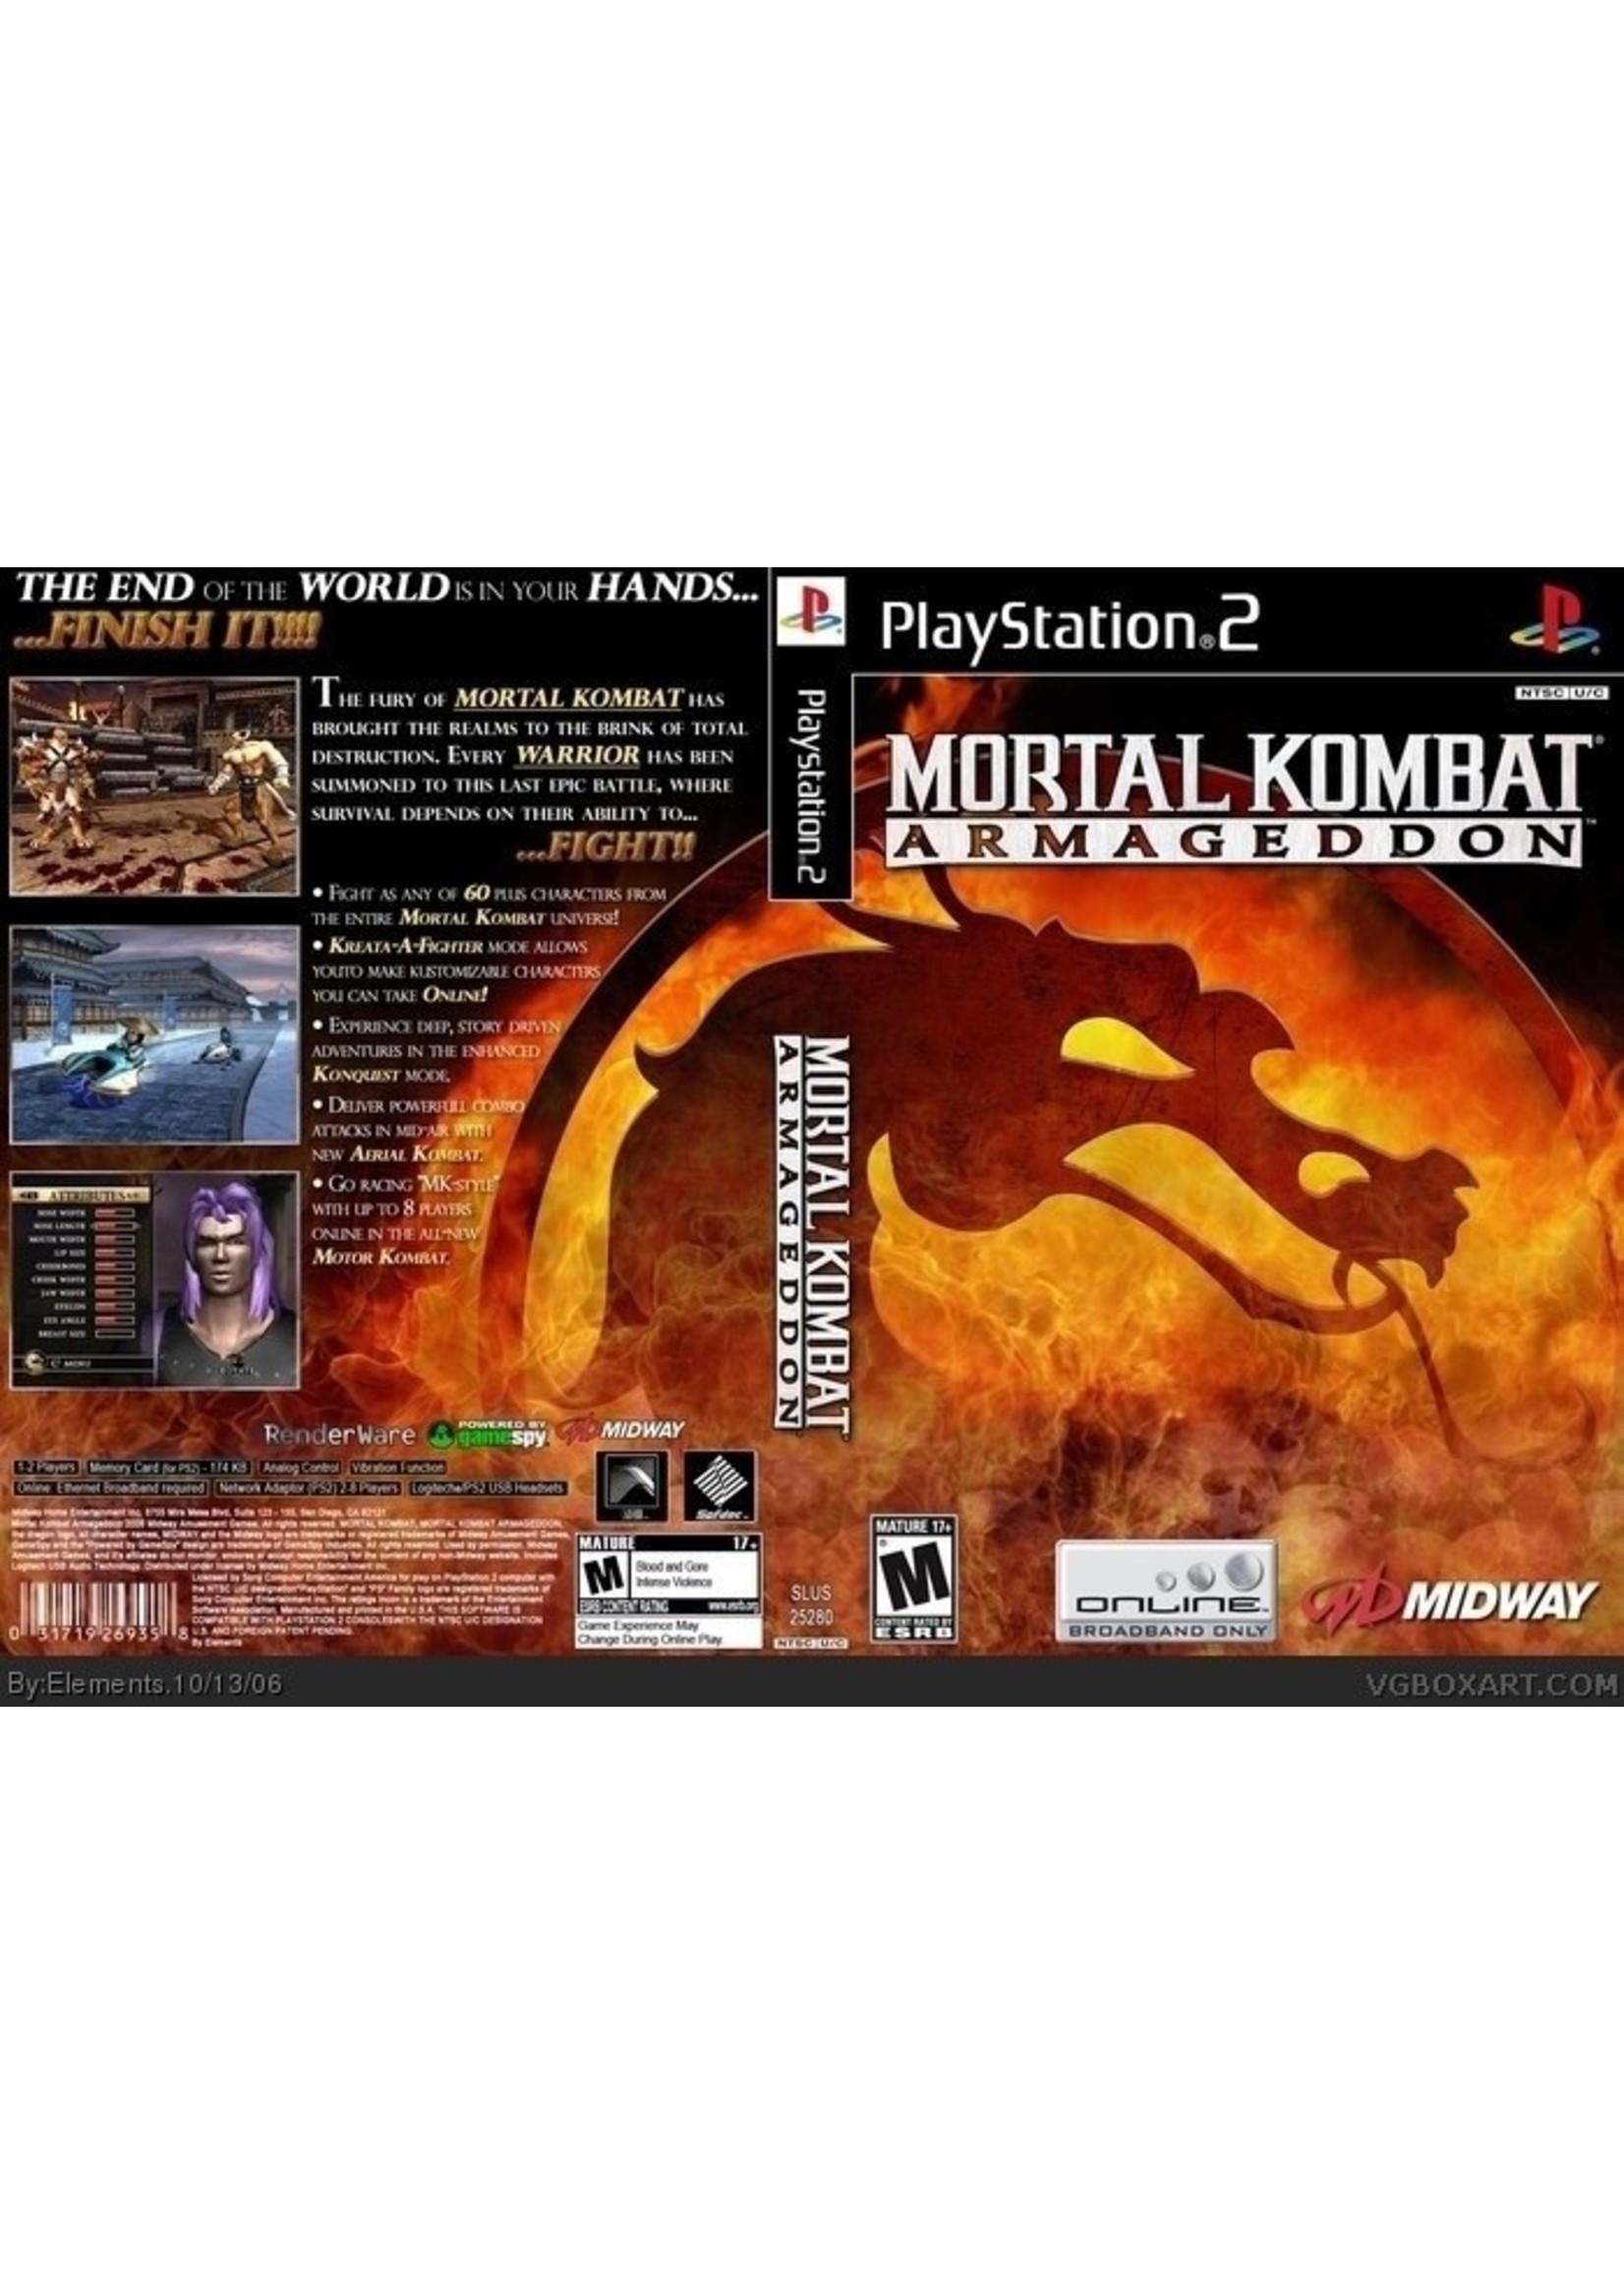 Sony Playstation 2 (PS2) Mortal Kombat Armageddon